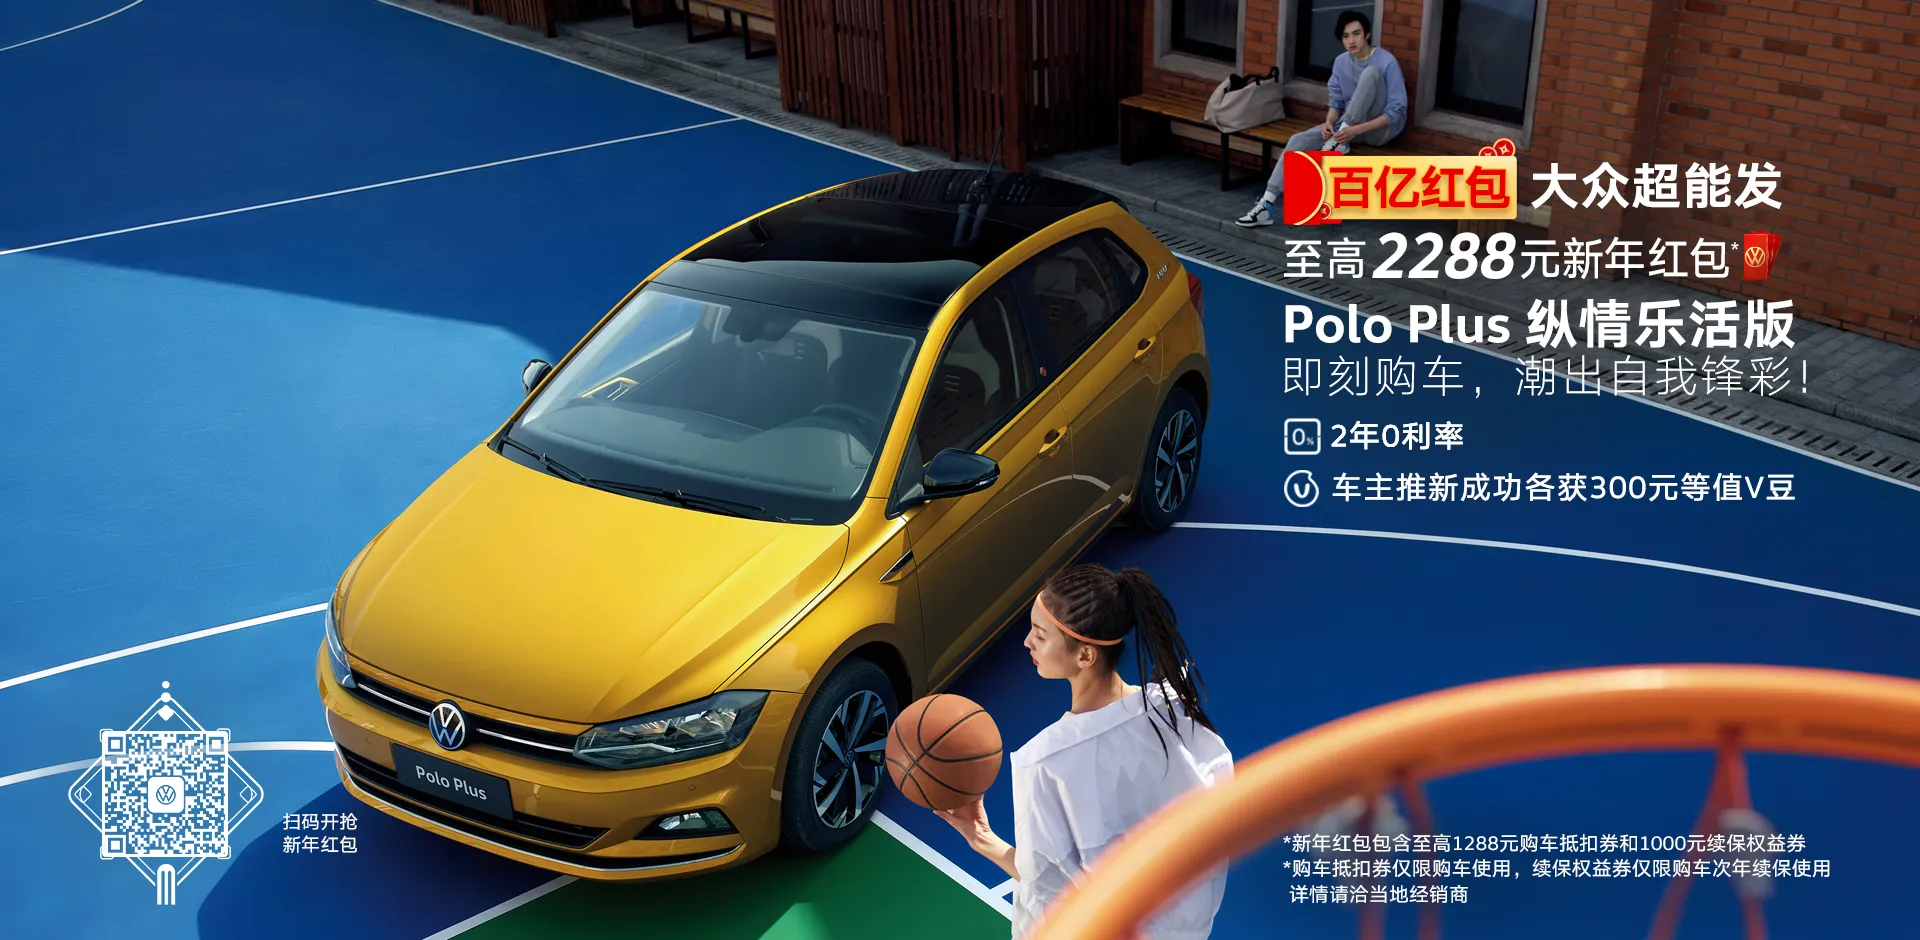 Polo Plus新款